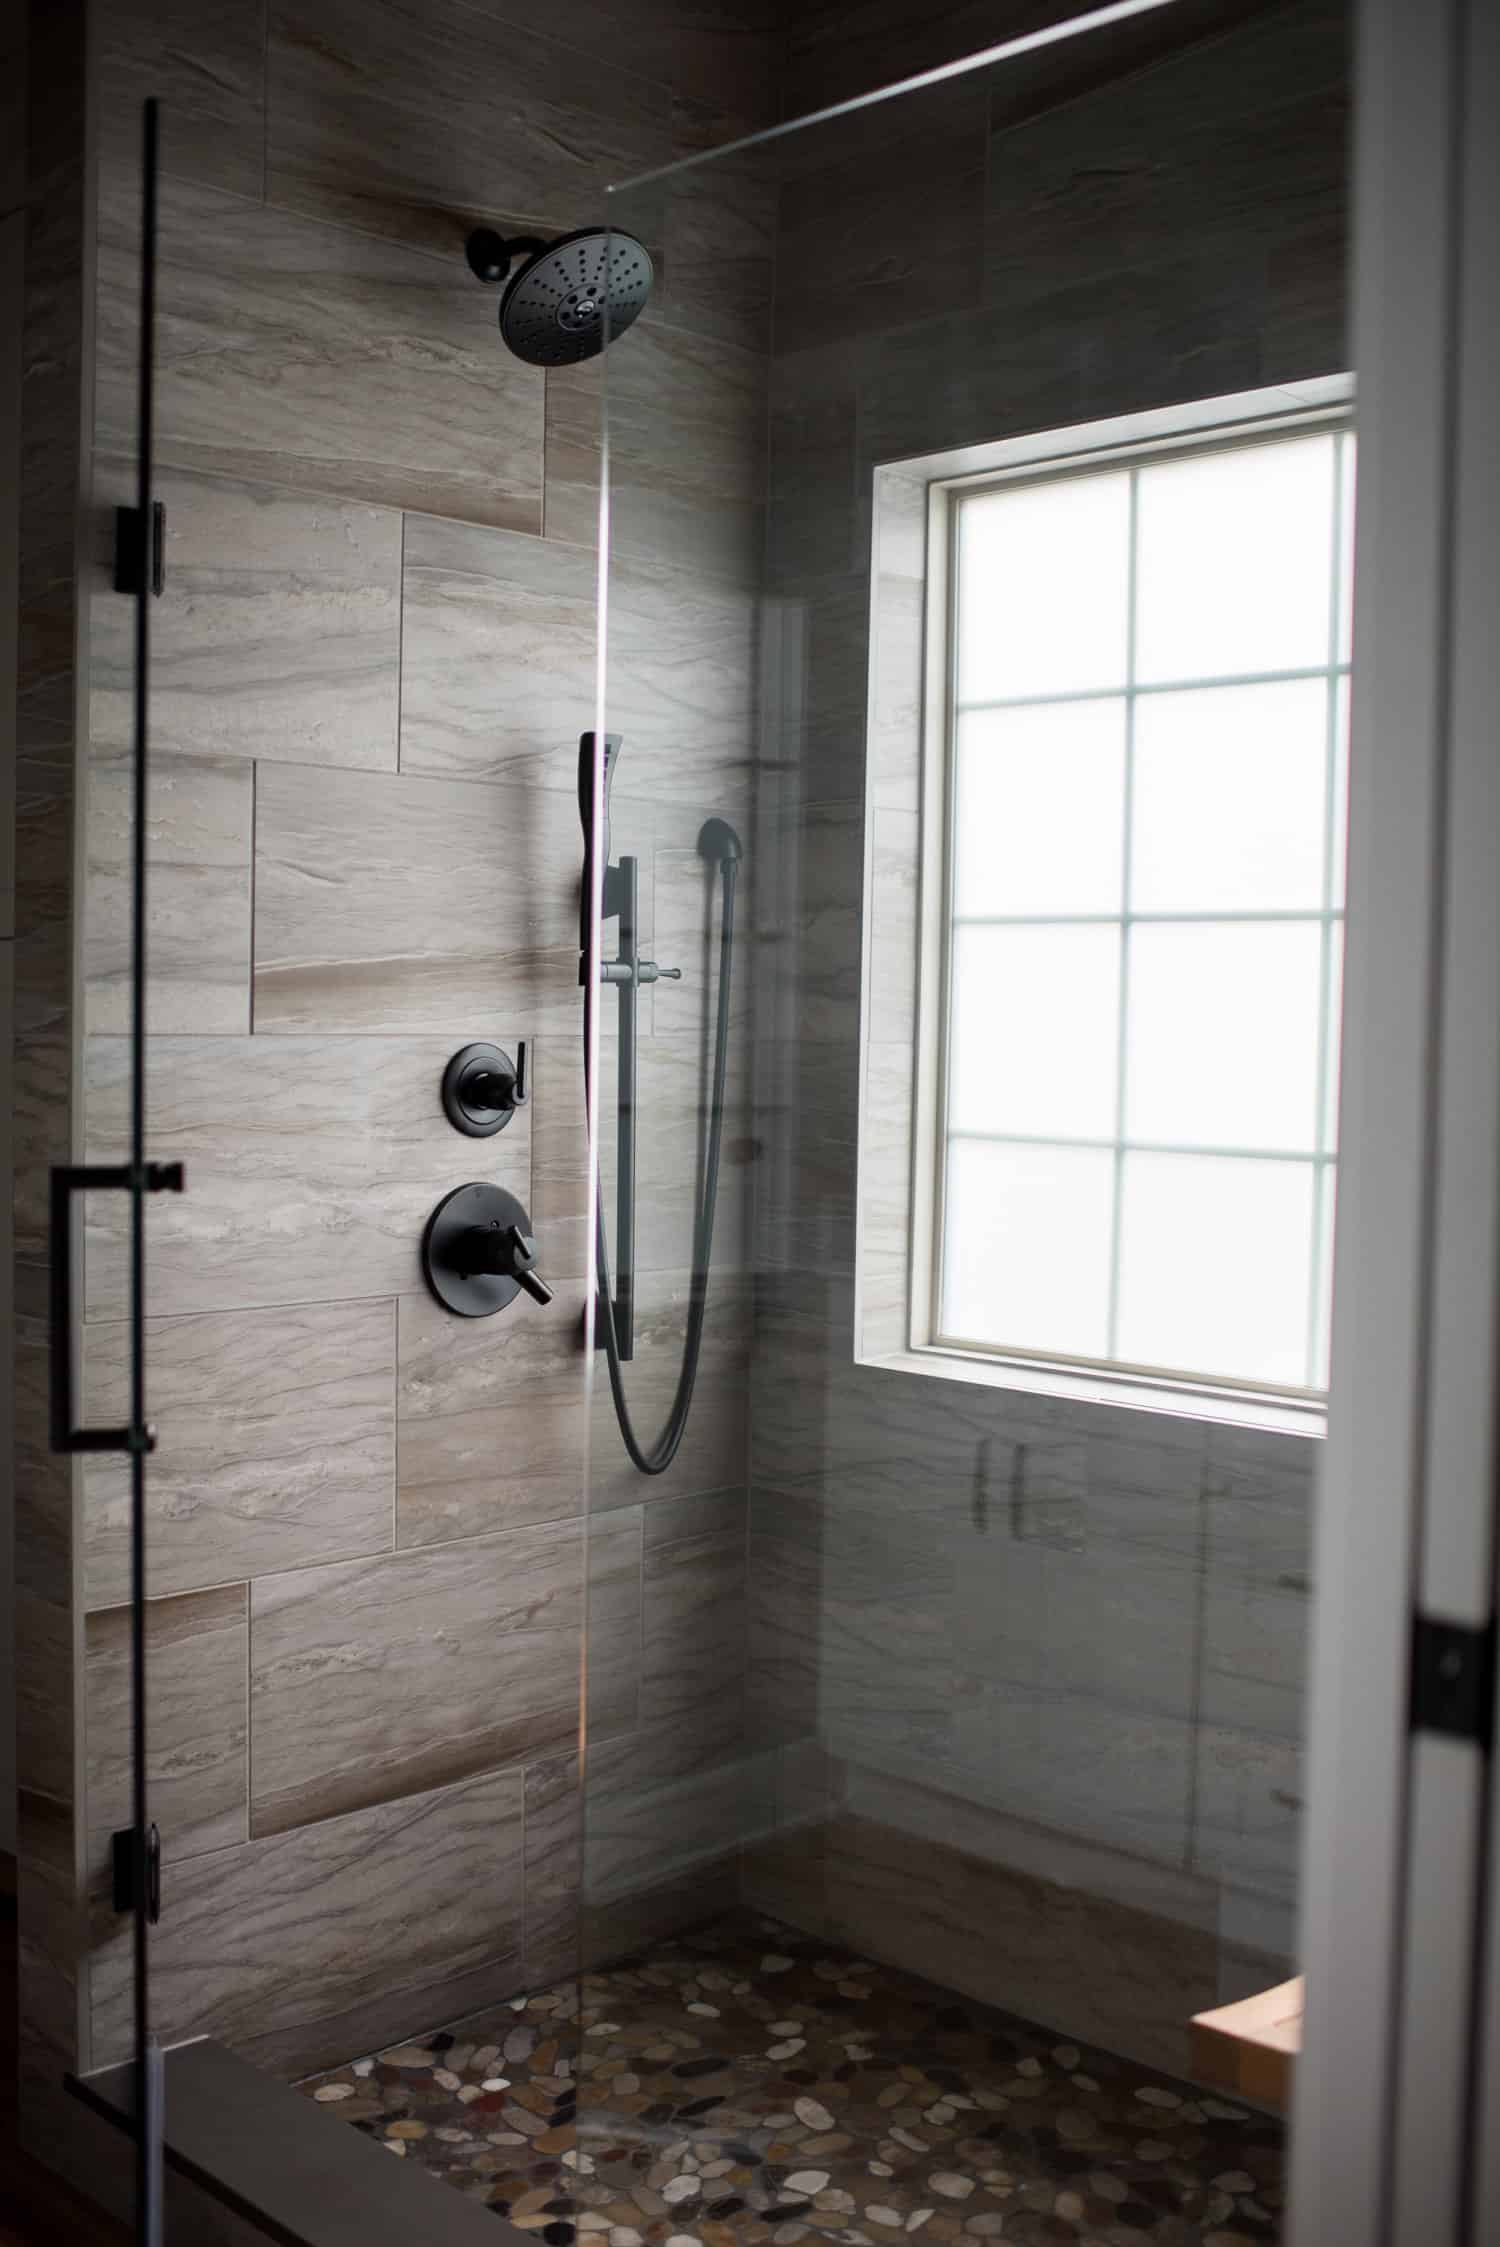 Nicholas Design Build | A modern bathroom with a glass shower door and a window.